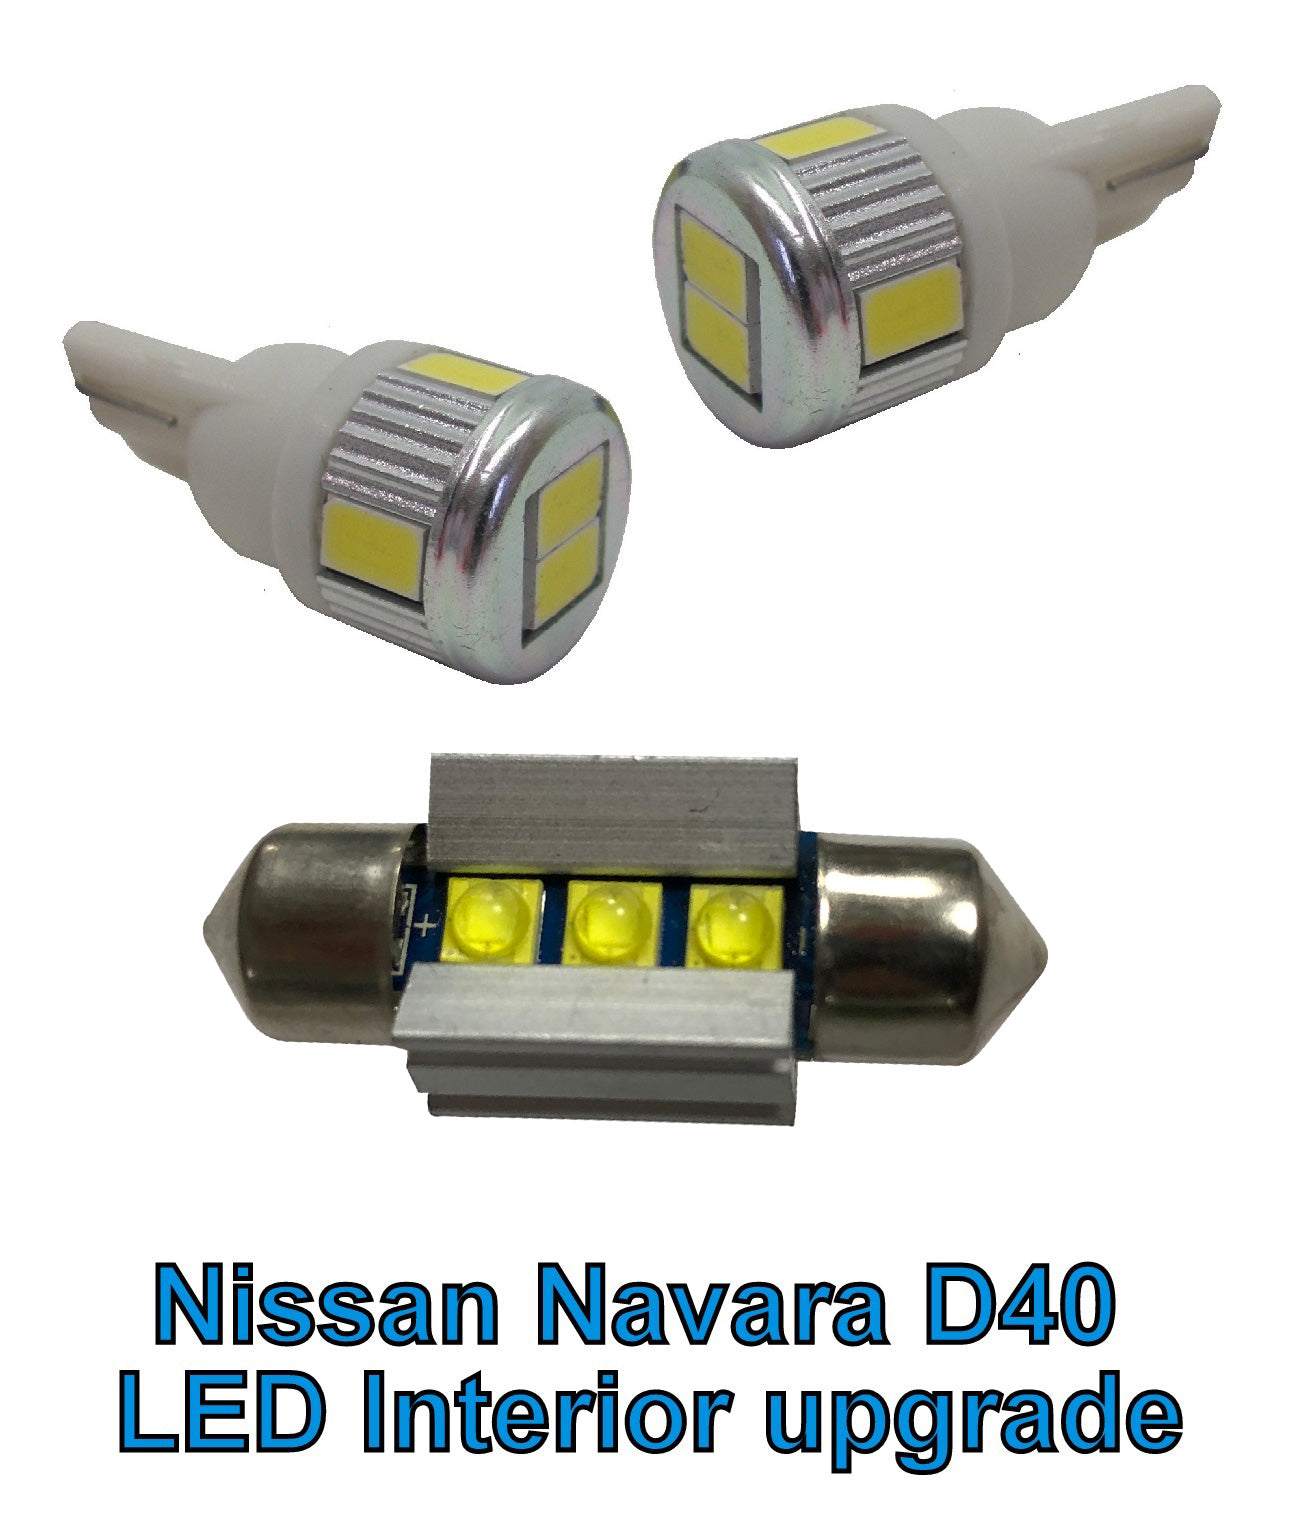 Nissan Navara D40 Upgrades